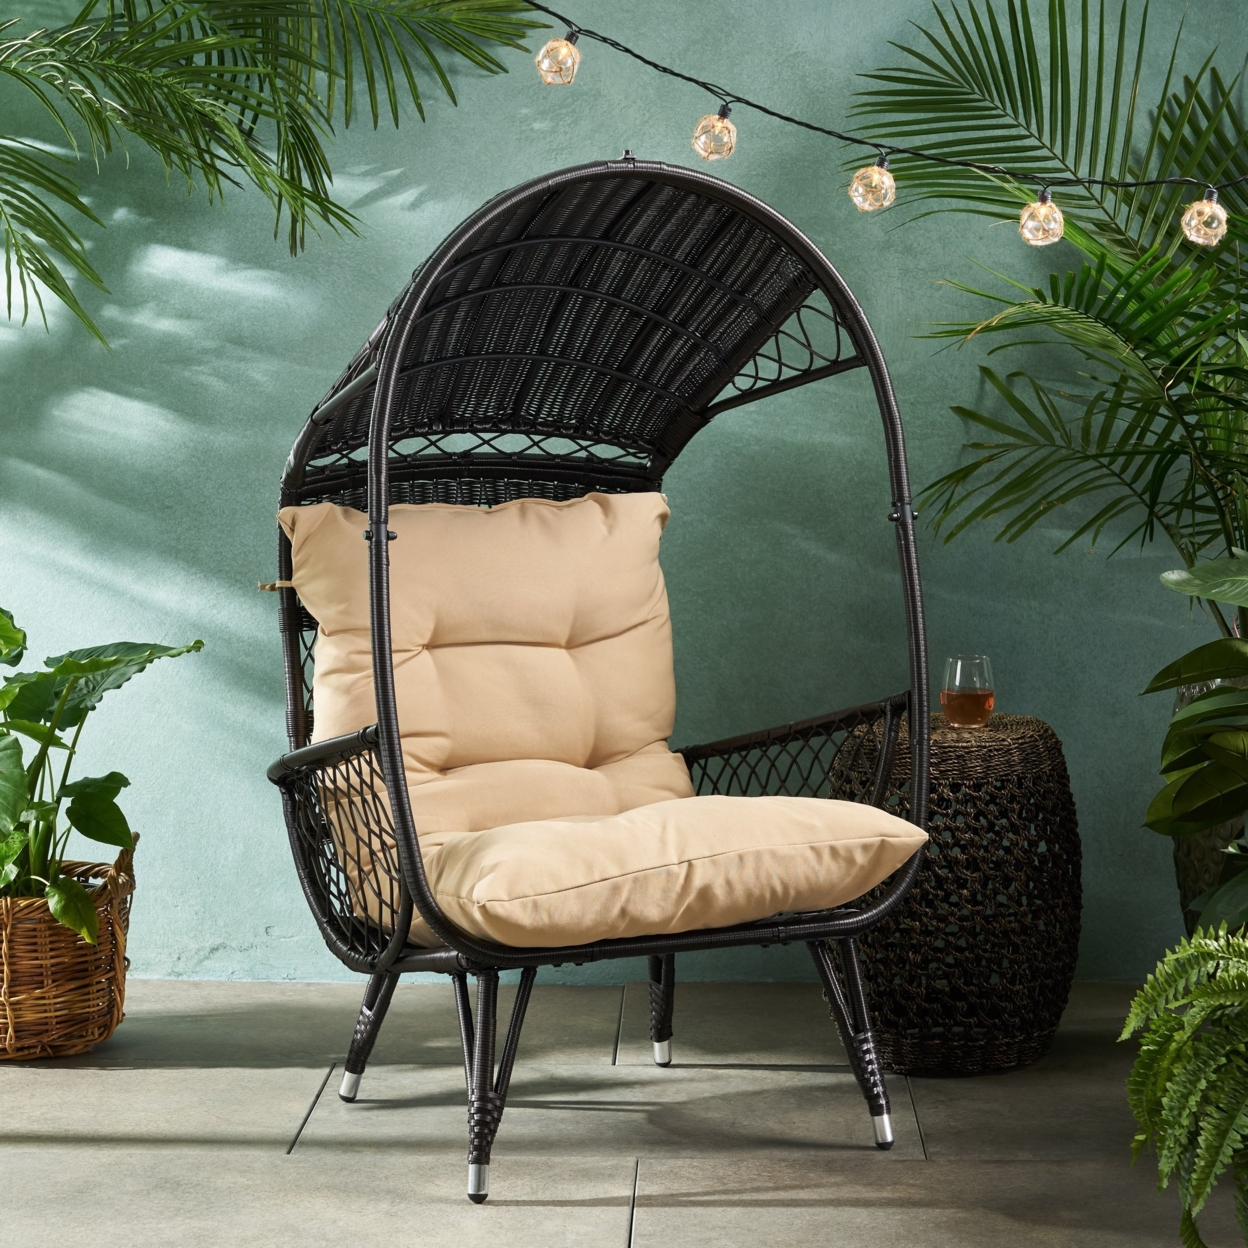 Primo Outdoor Wicker Freestanding Basket Chair - Brown / Tan